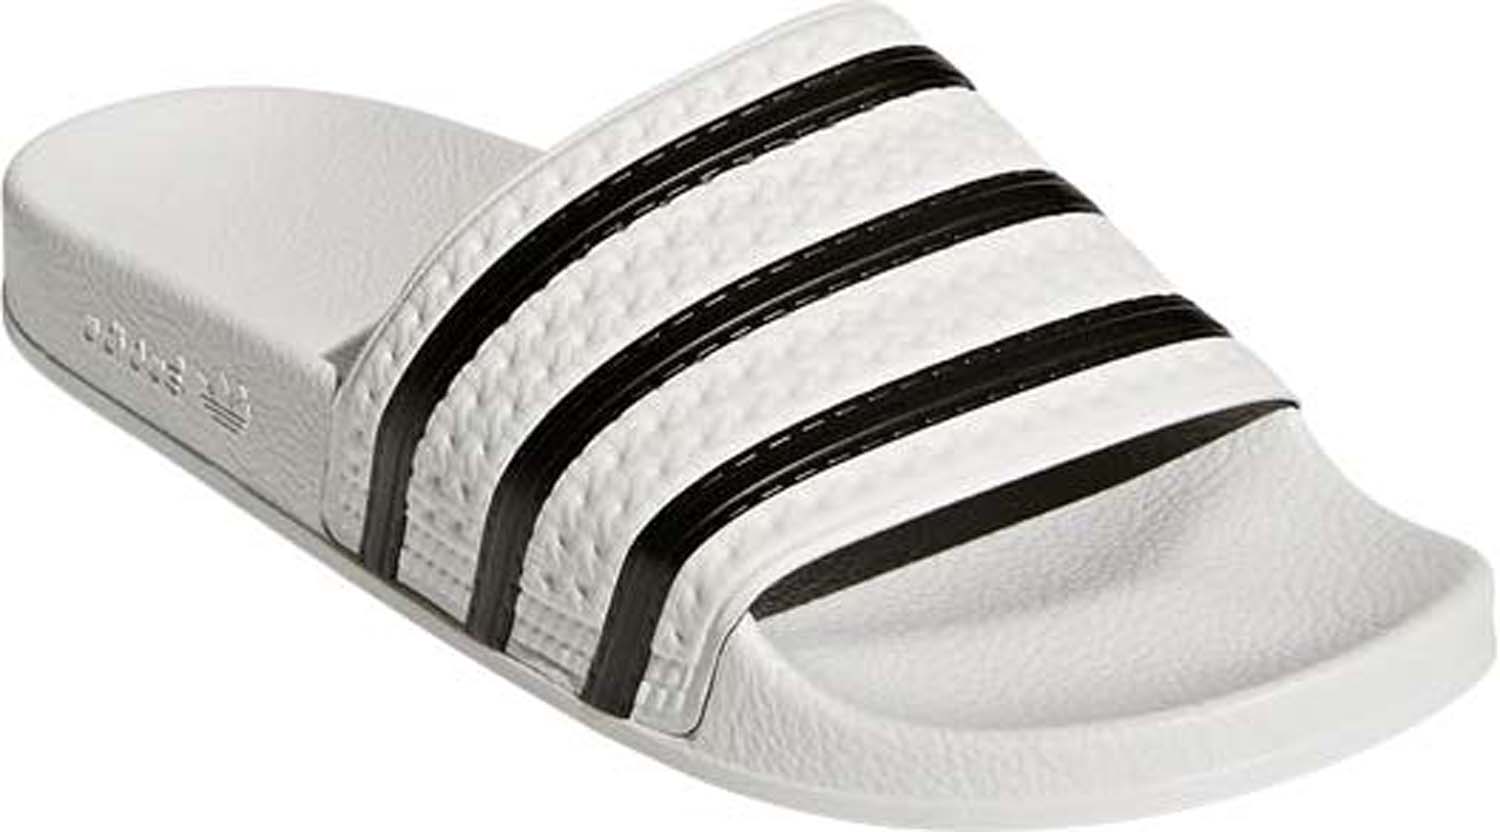 Adidas Slippers Adilette 280648 White | eBay